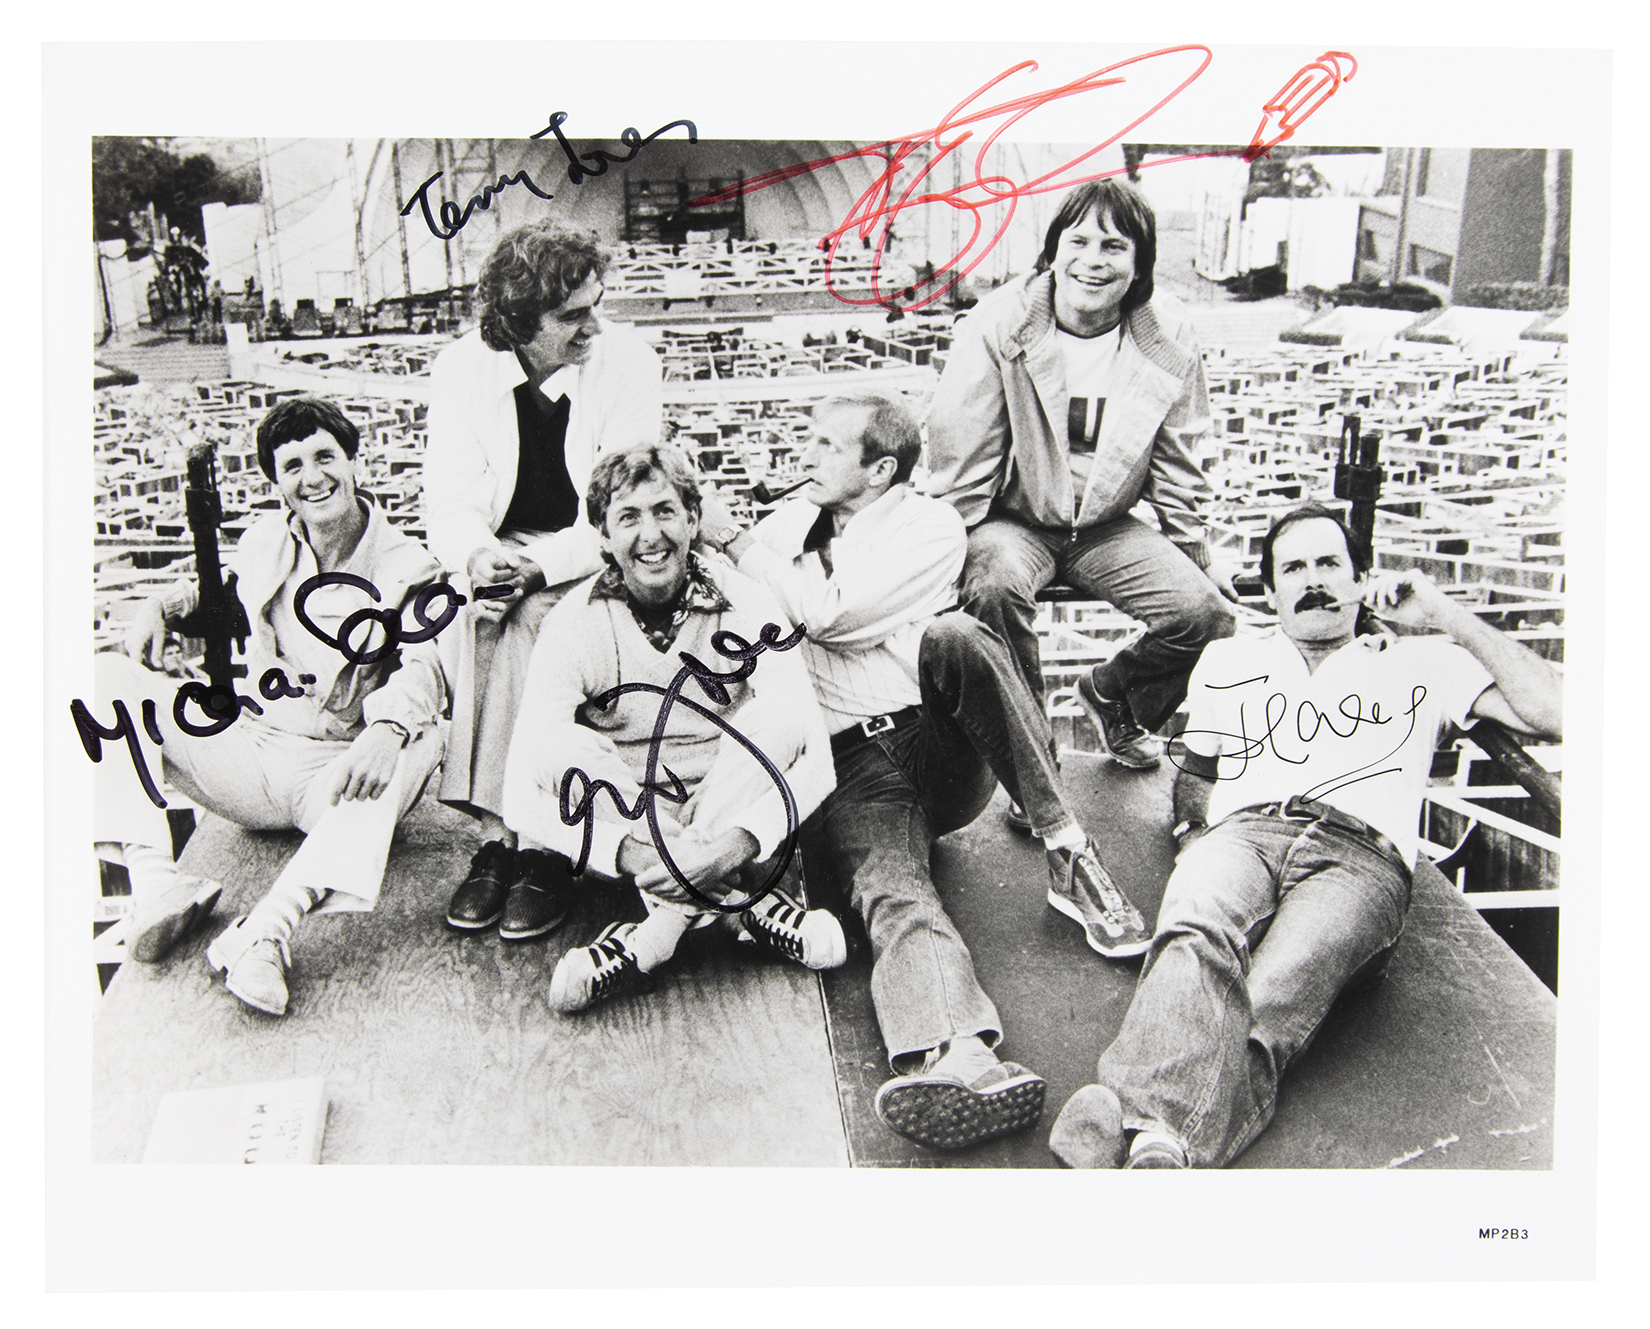 Lot #475 Monty Python Signed Photograph